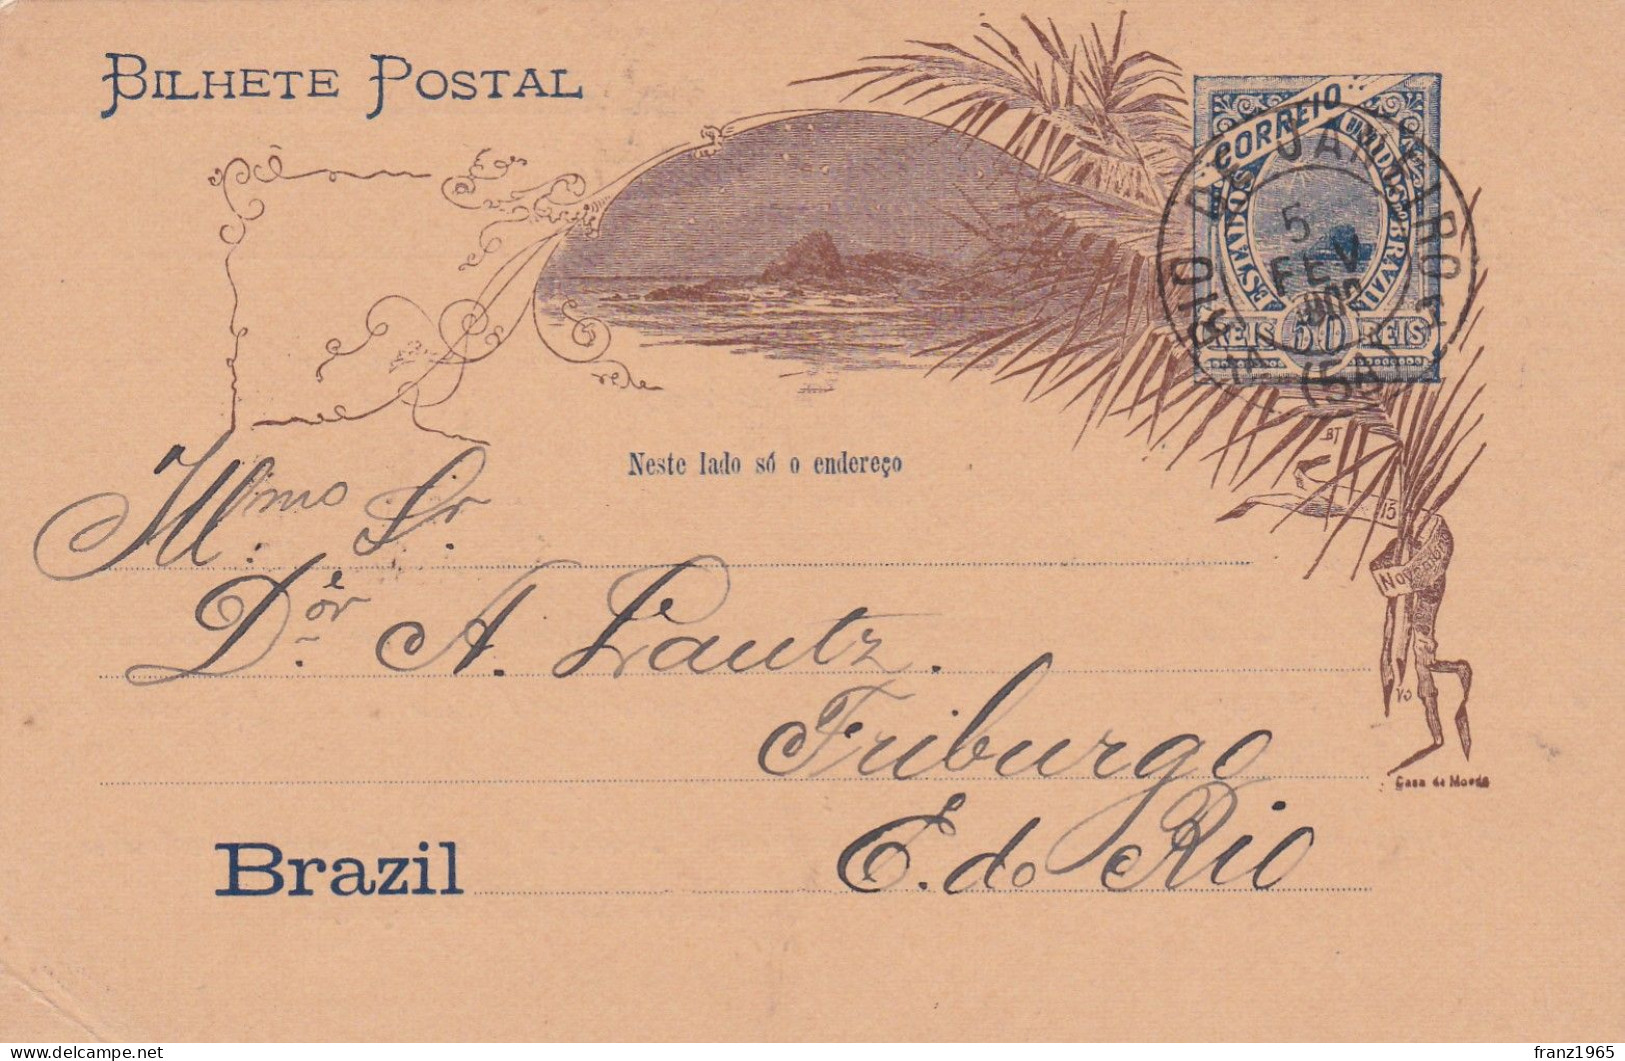 Bilhete Postal - 1905 - Covers & Documents